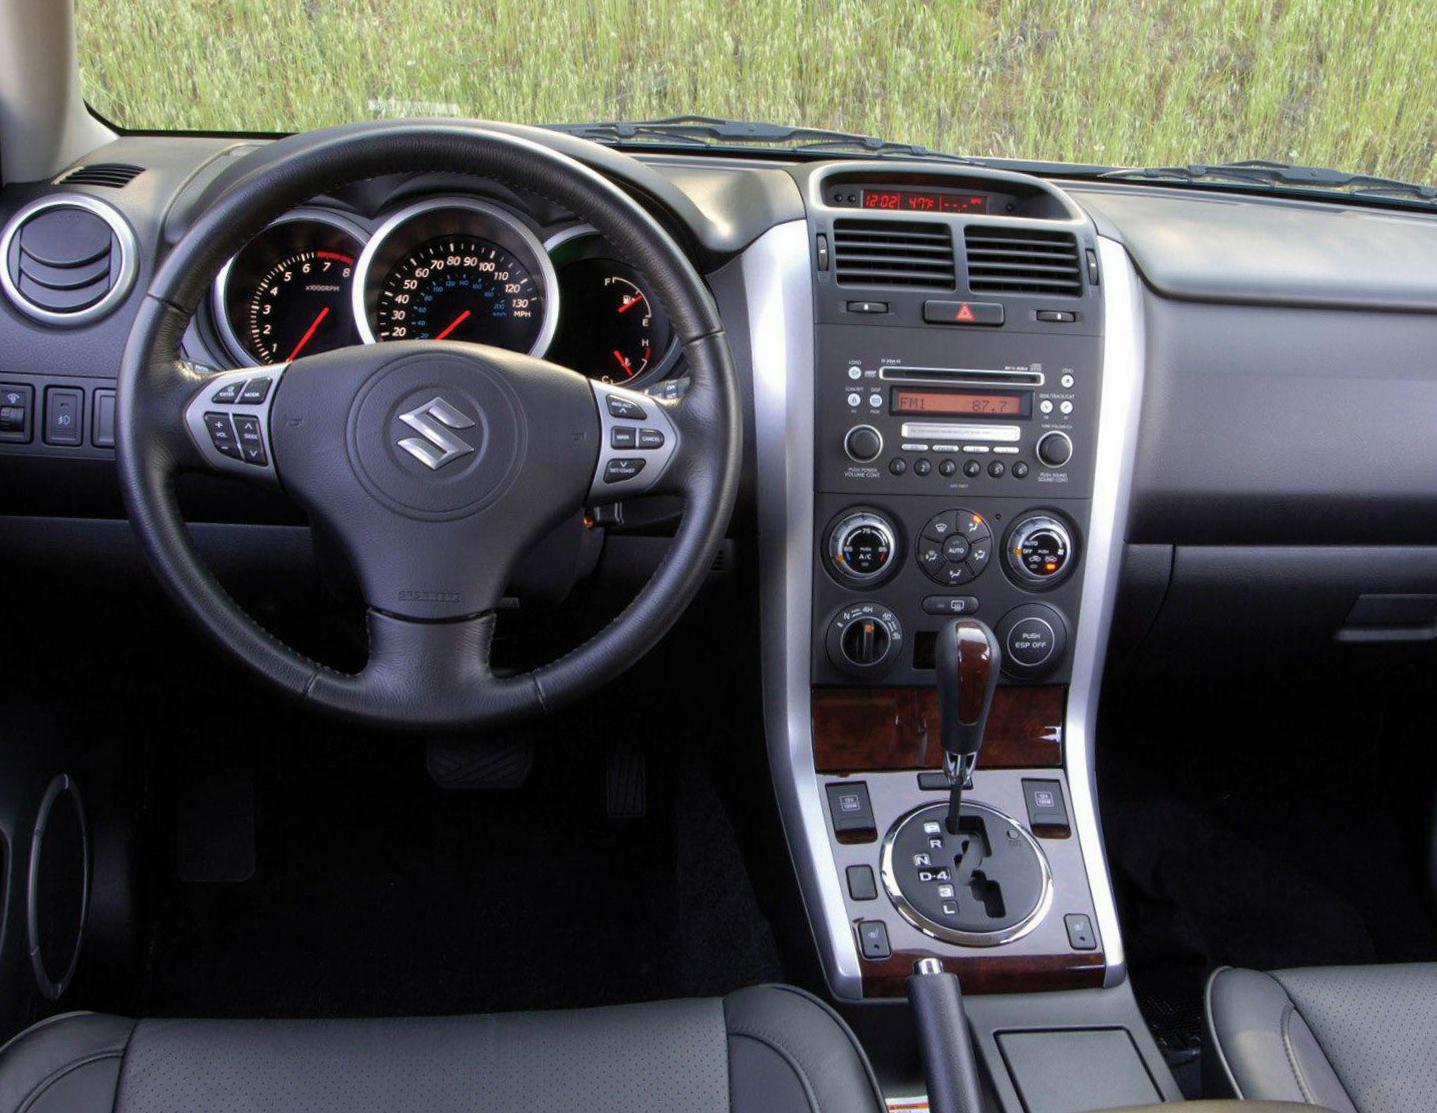 Grand Vitara 3 doors Suzuki Specification 2012